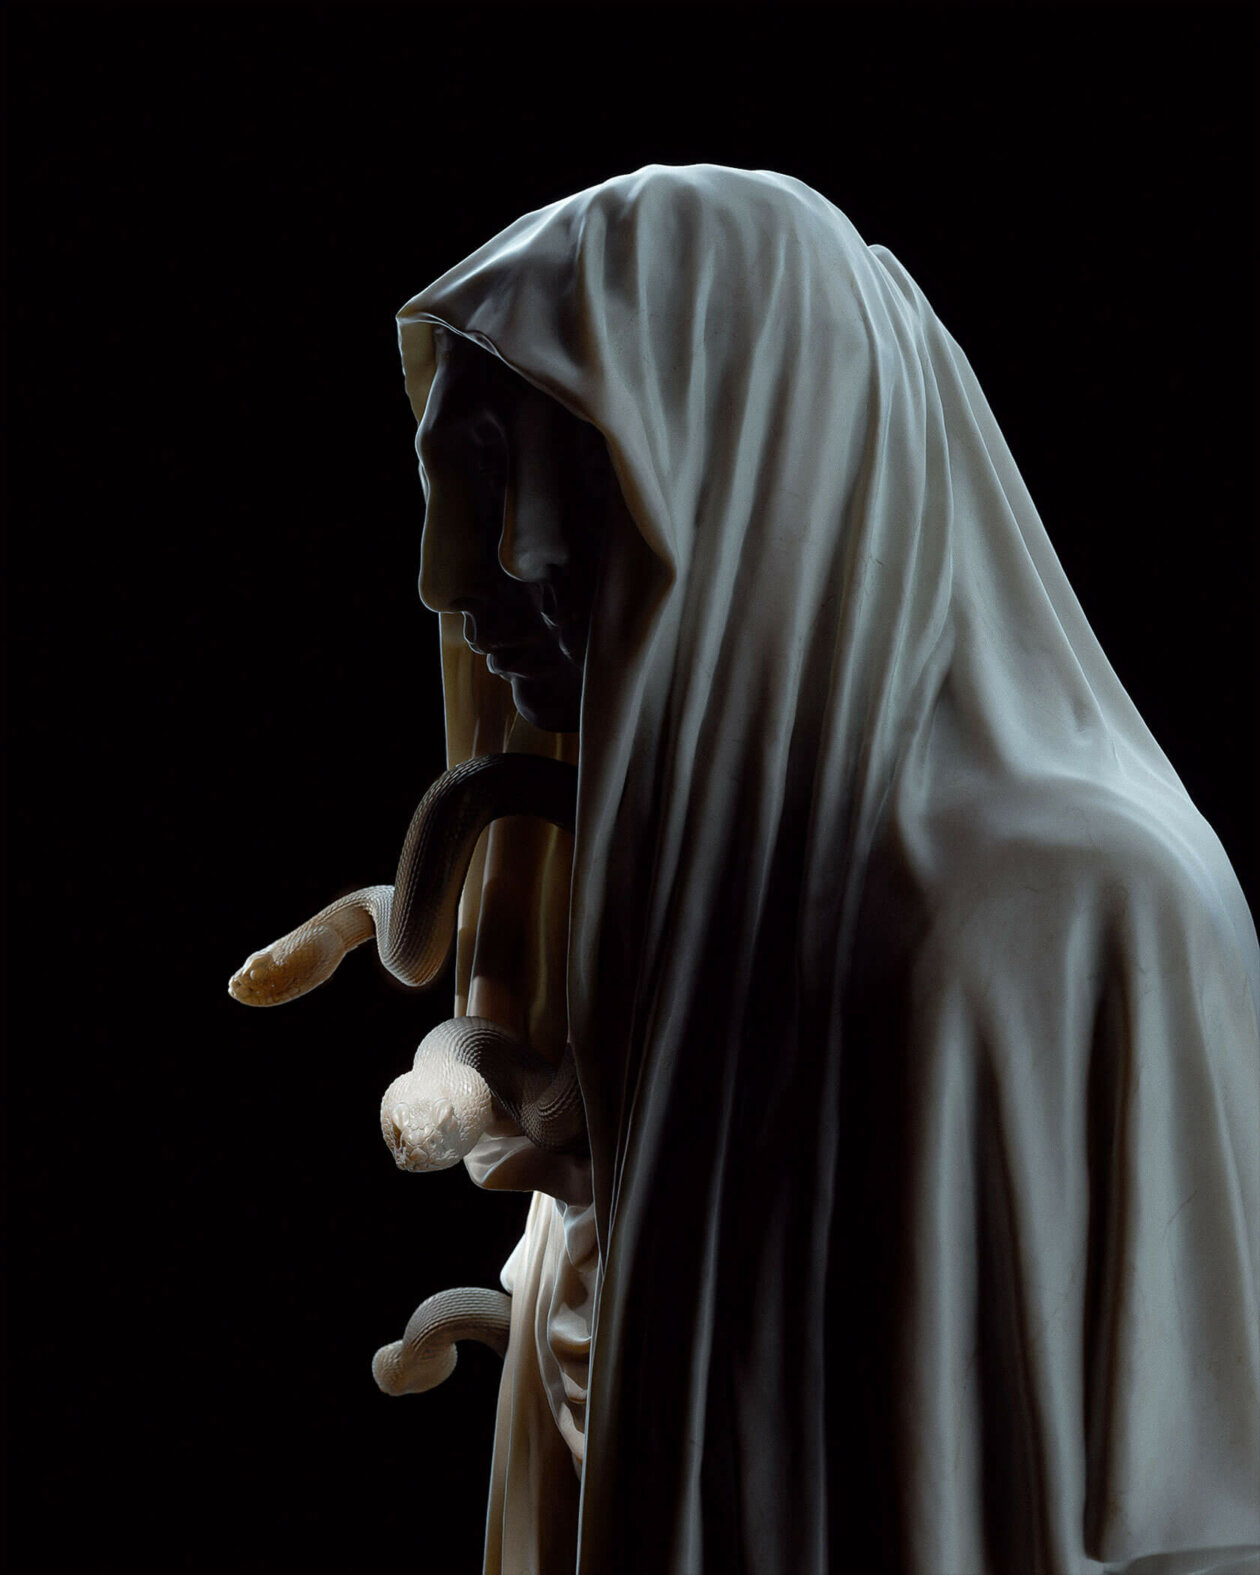 The Dark And Macabre Sculptures Of Hedi Xandt 7